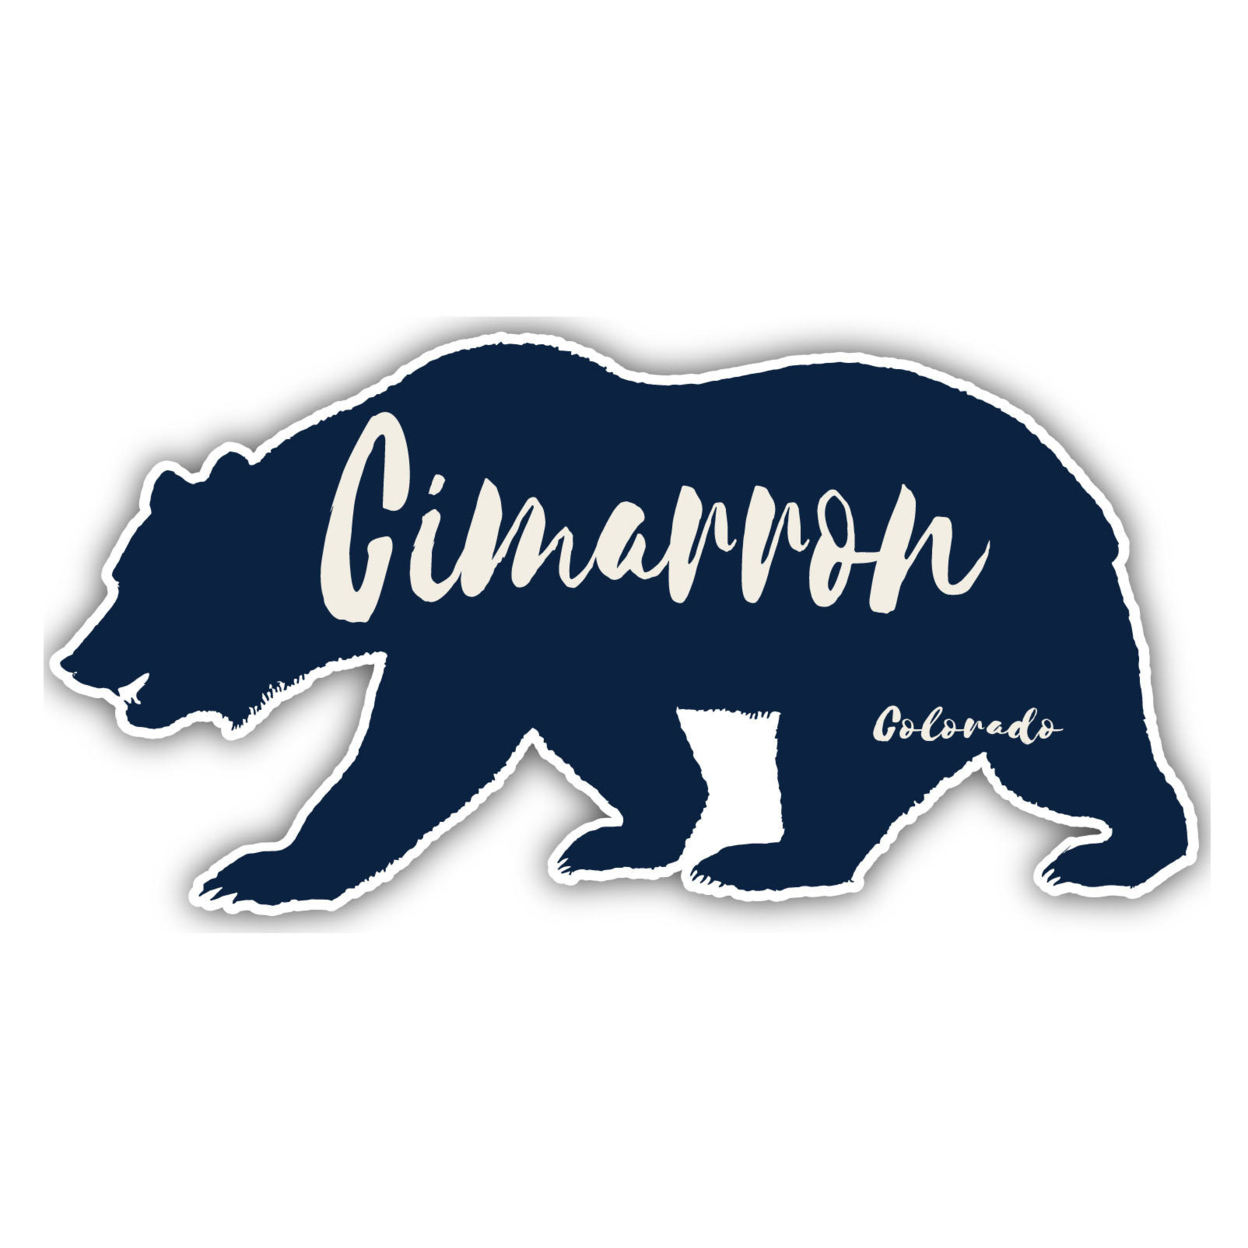 Cimarron Colorado Souvenir Decorative Stickers (Choose Theme And Size) - 4-Pack, 2-Inch, Bear